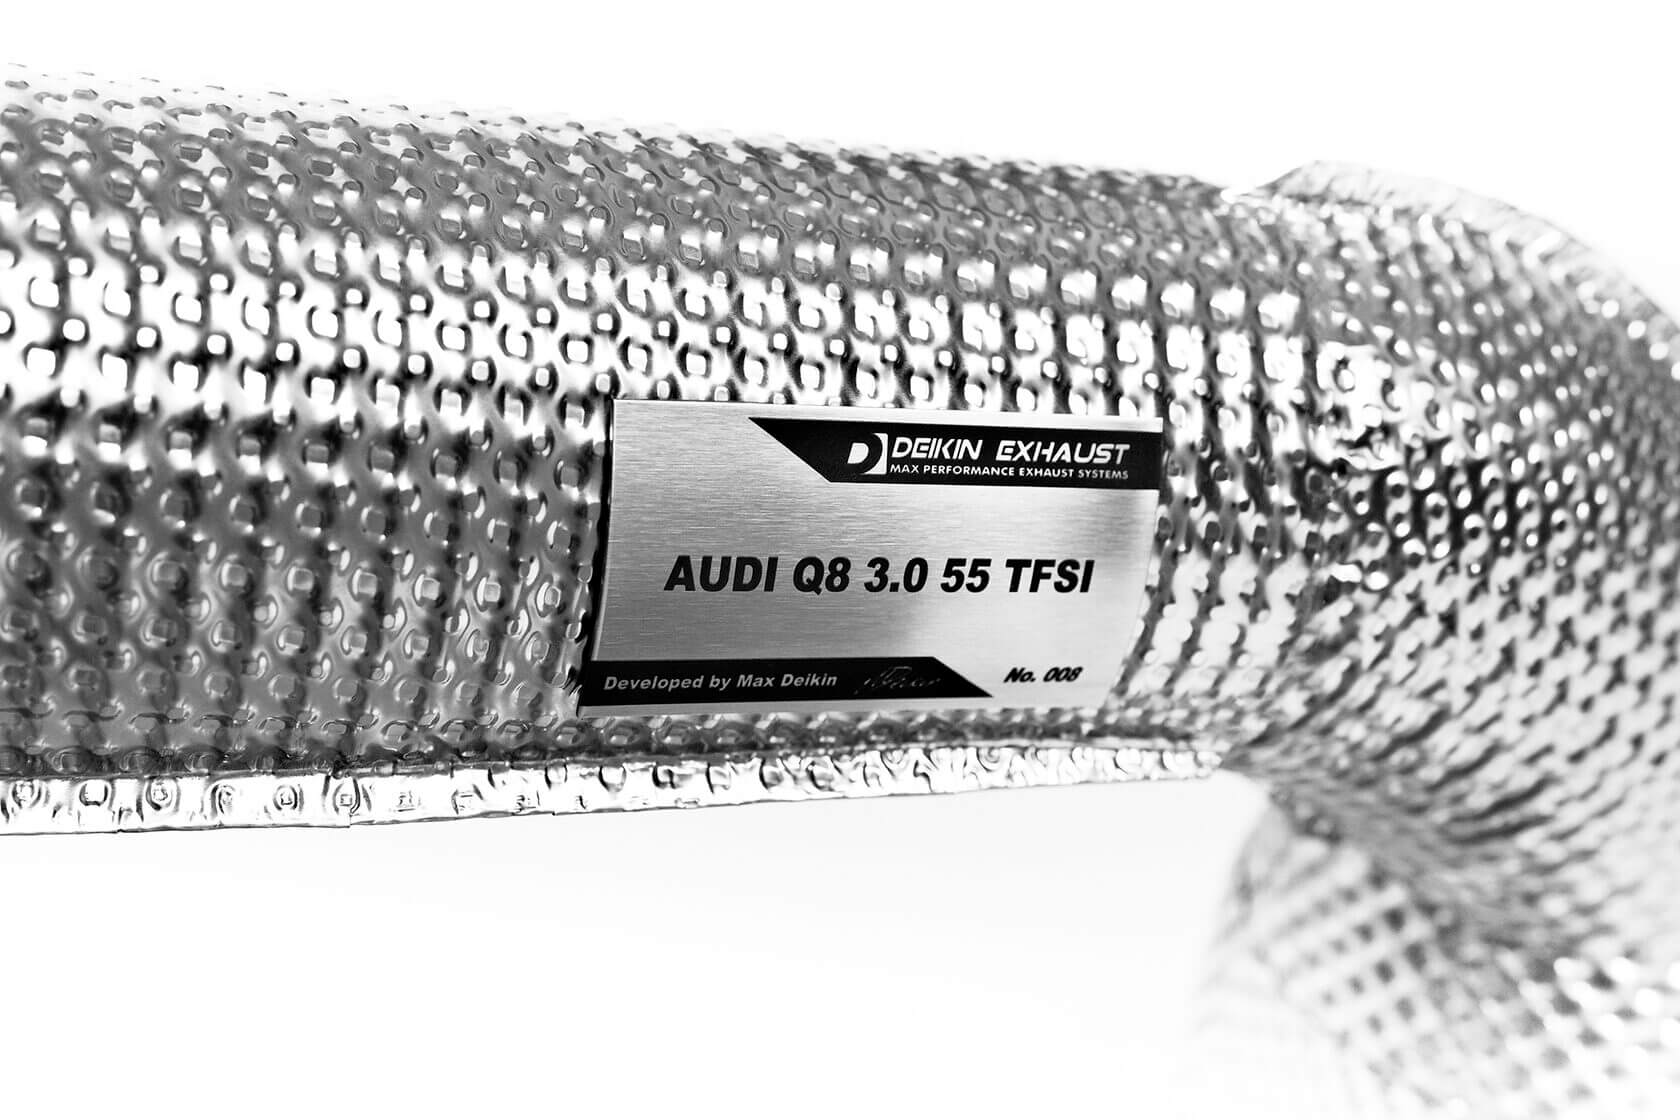 DEIKIN 10-AUDI.Q8.4M-DP Downpipe for AUDI Q8 (4M) 55 TFSi without HeatShield Photo-2 